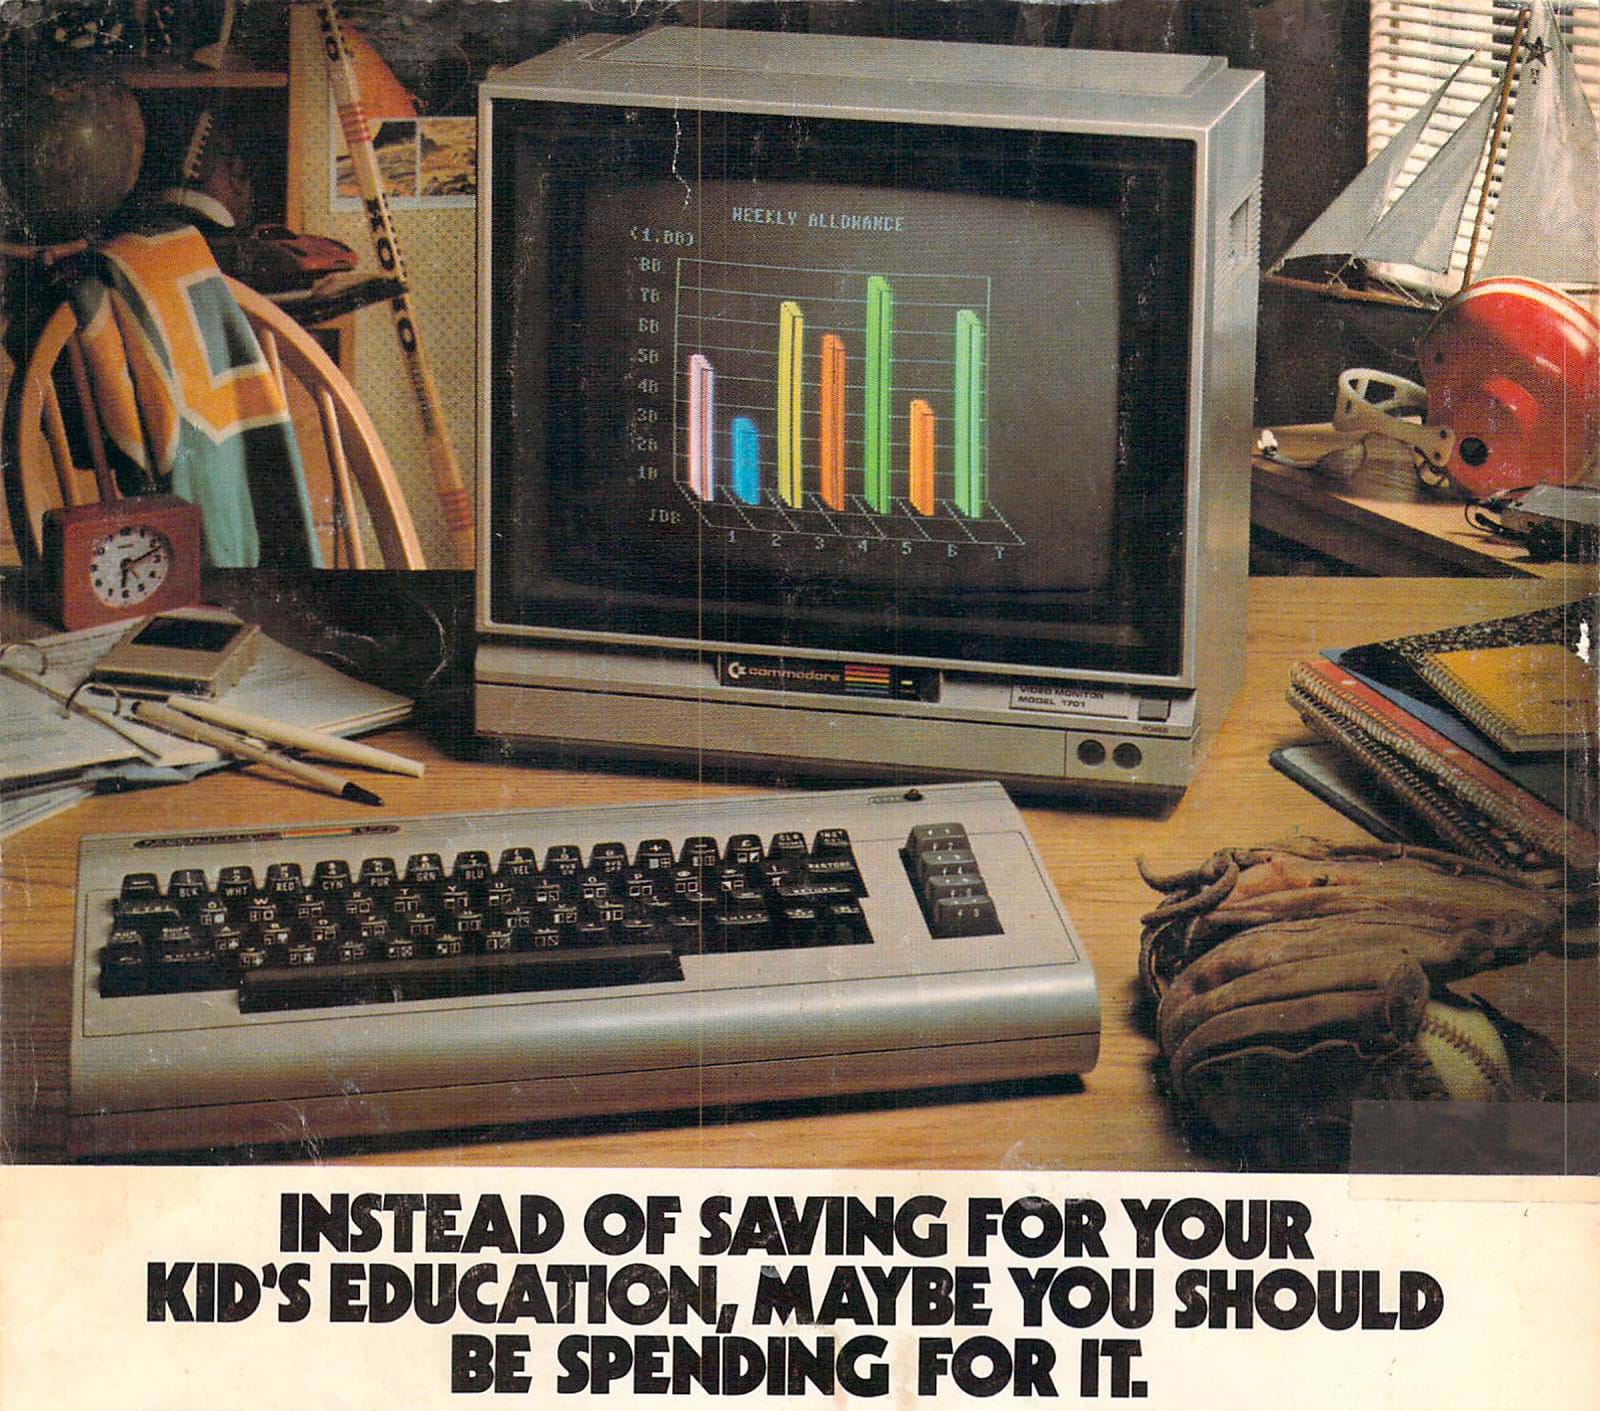 Commodore 64 Advert